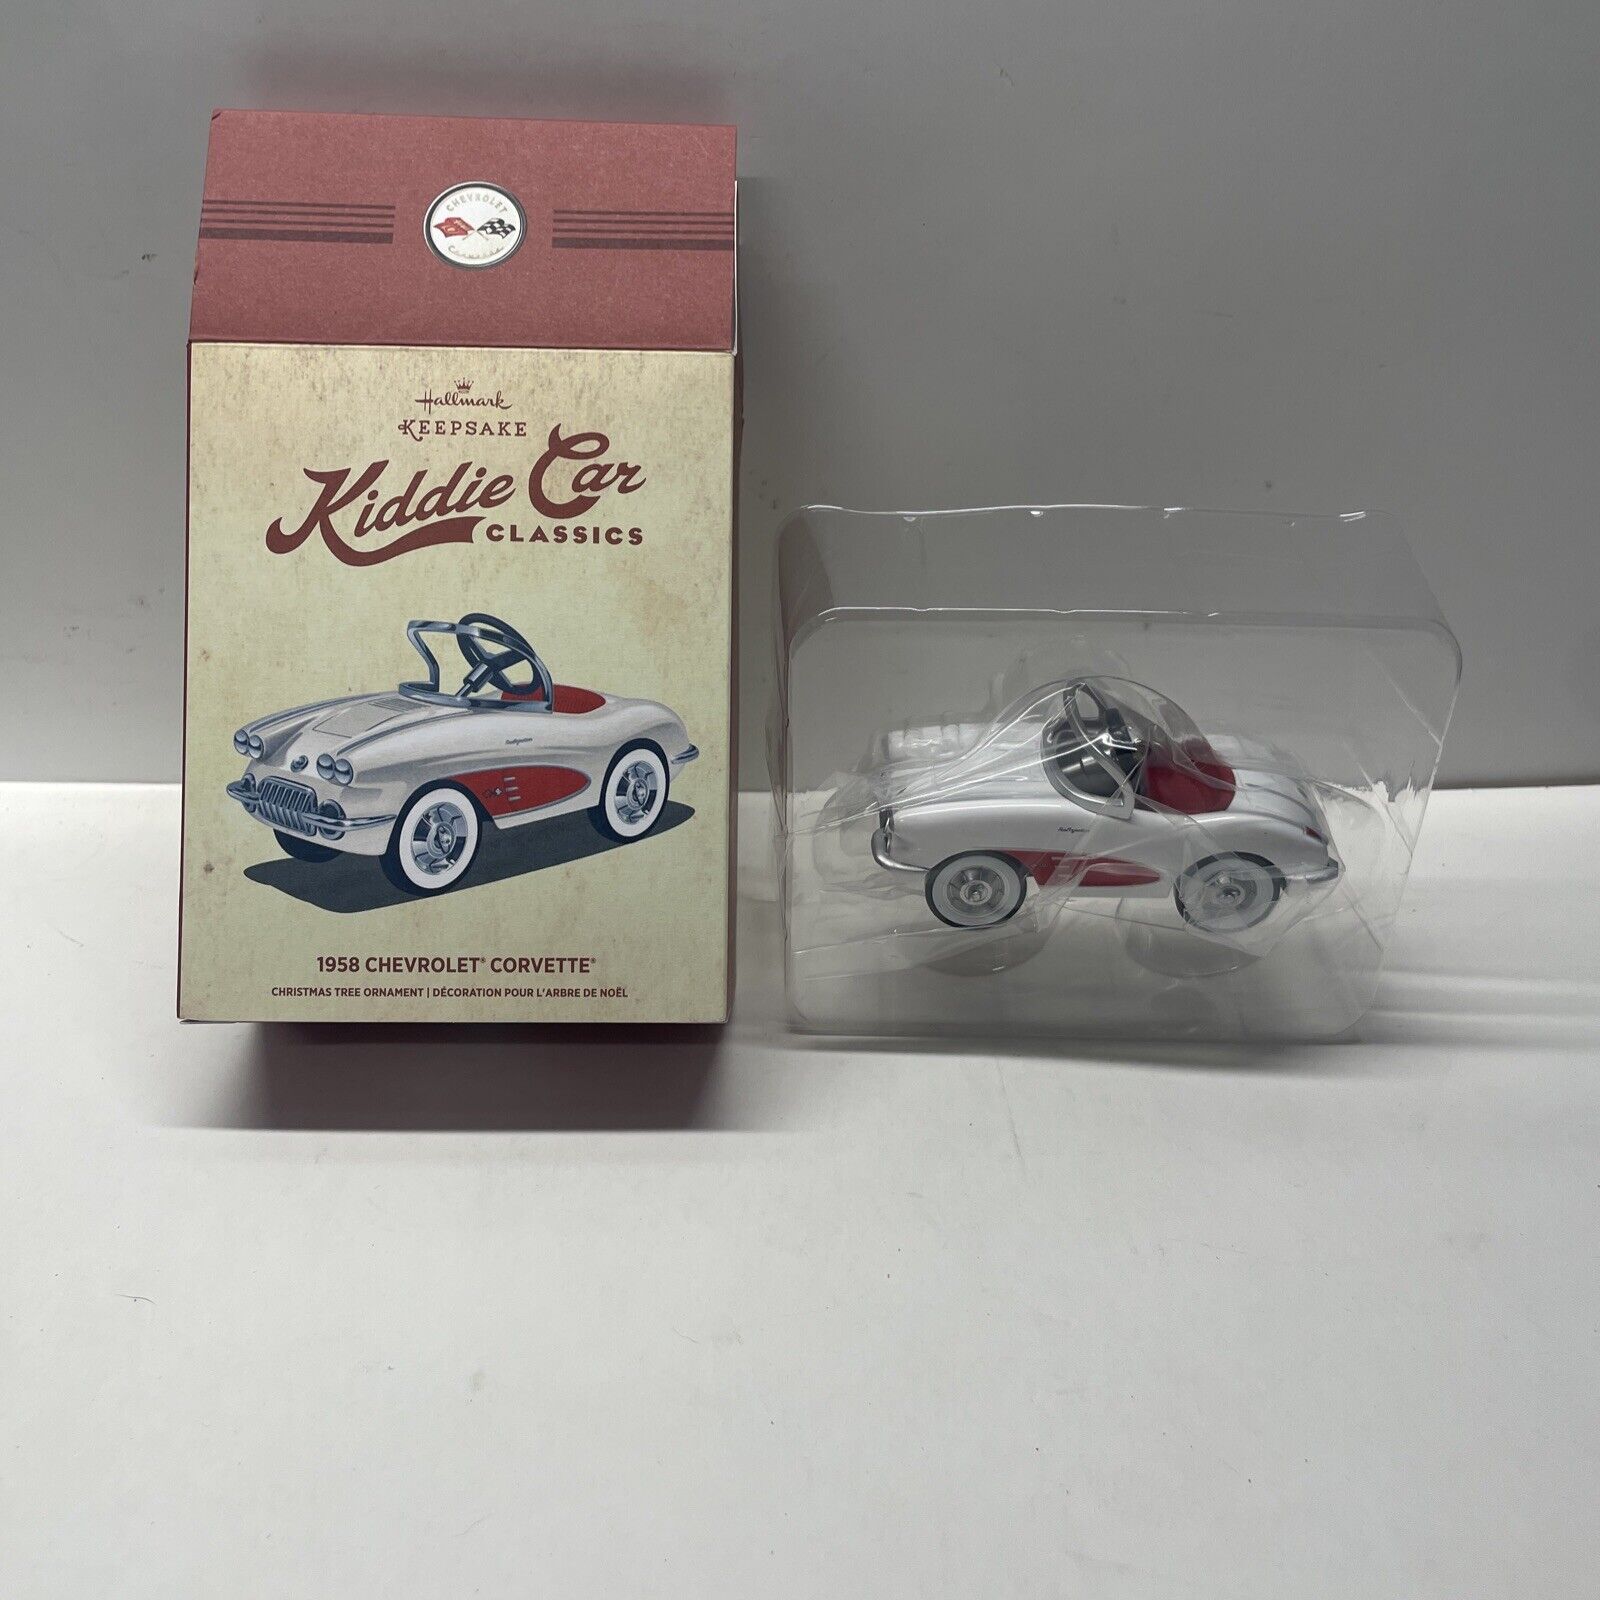 Hallmark Kiddie Car Classics 1958 Chevrolet Corvette Ornament